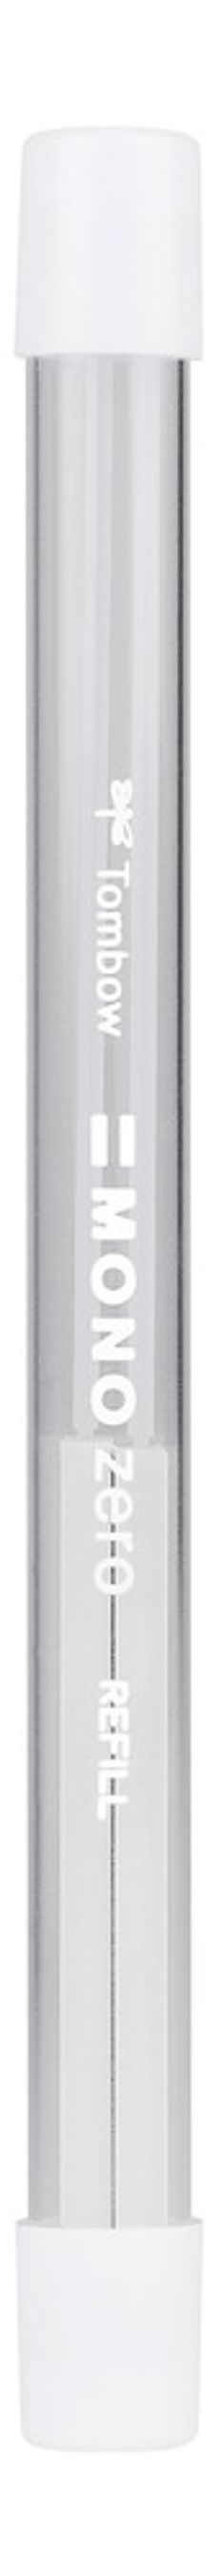 Recharge pour stylo-gomme MONO zéro pointe ronde rectangulaire